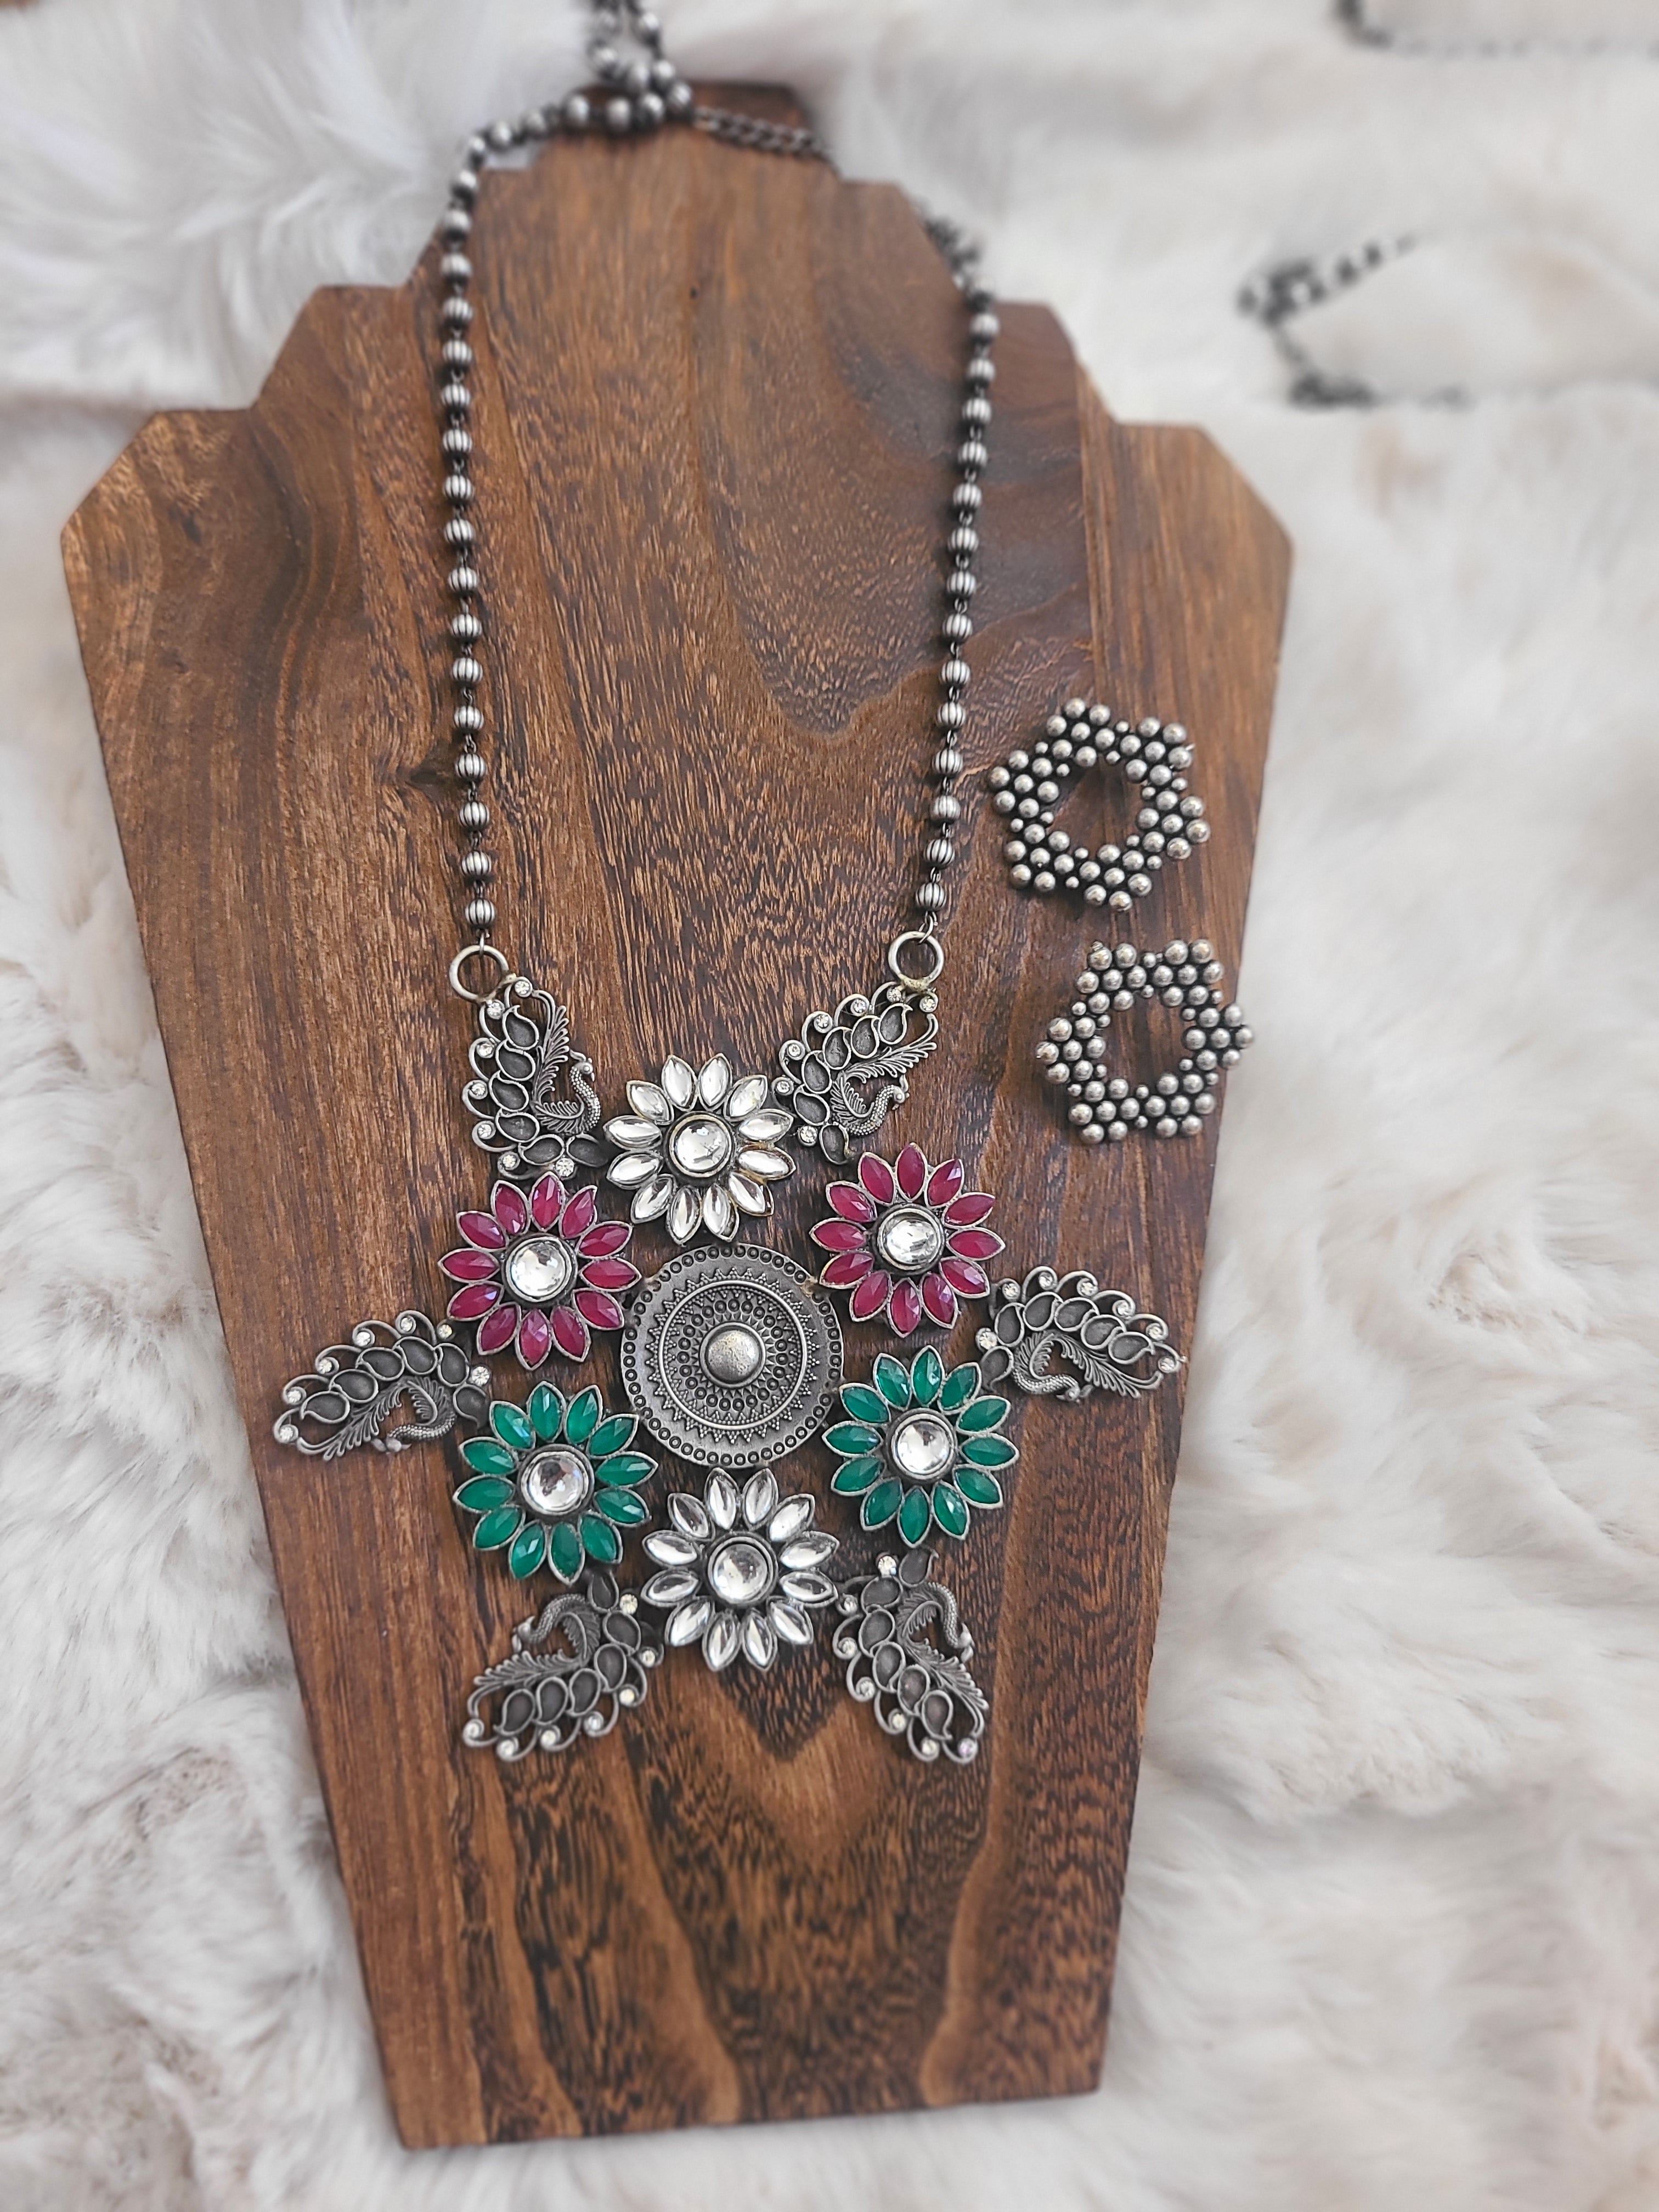 Miranda Handmade Silver alike pendant necklace set